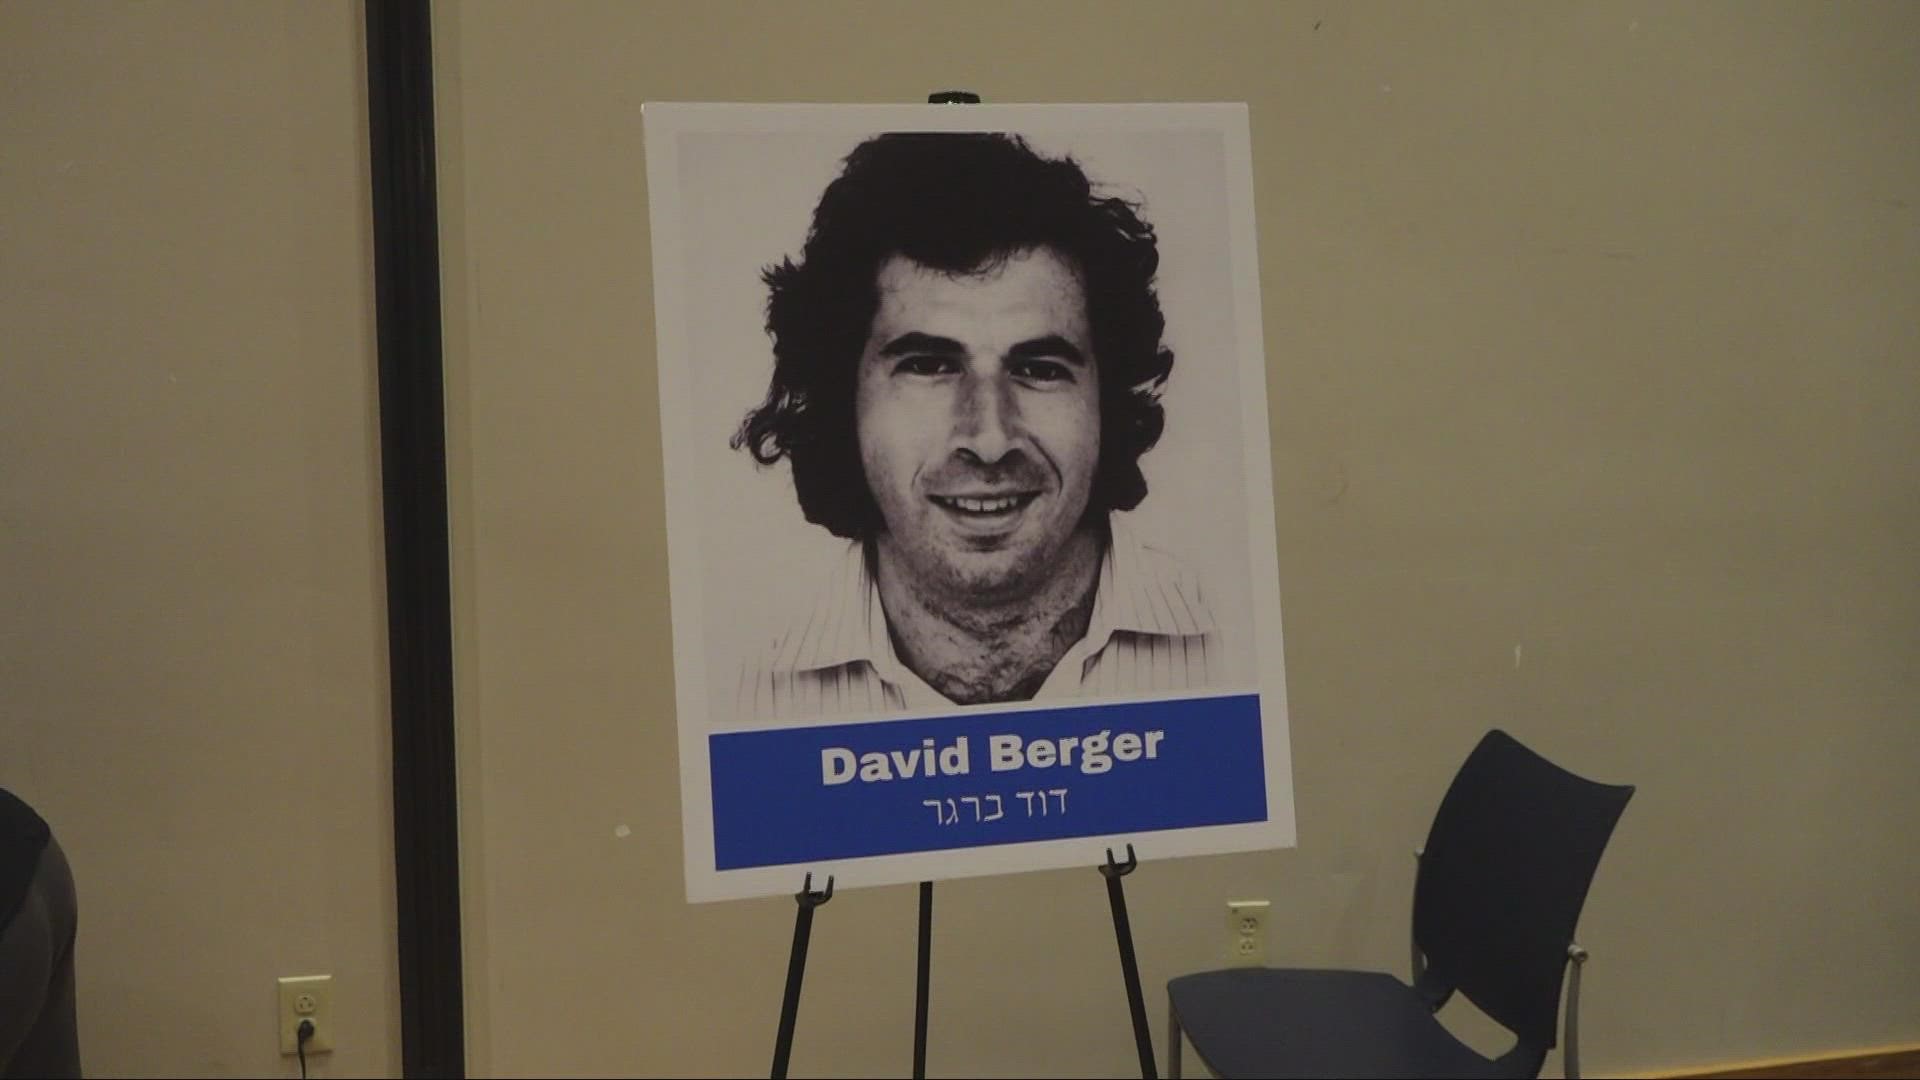 Remembering David Berger, killed 50 years ago in the Munich Massacre